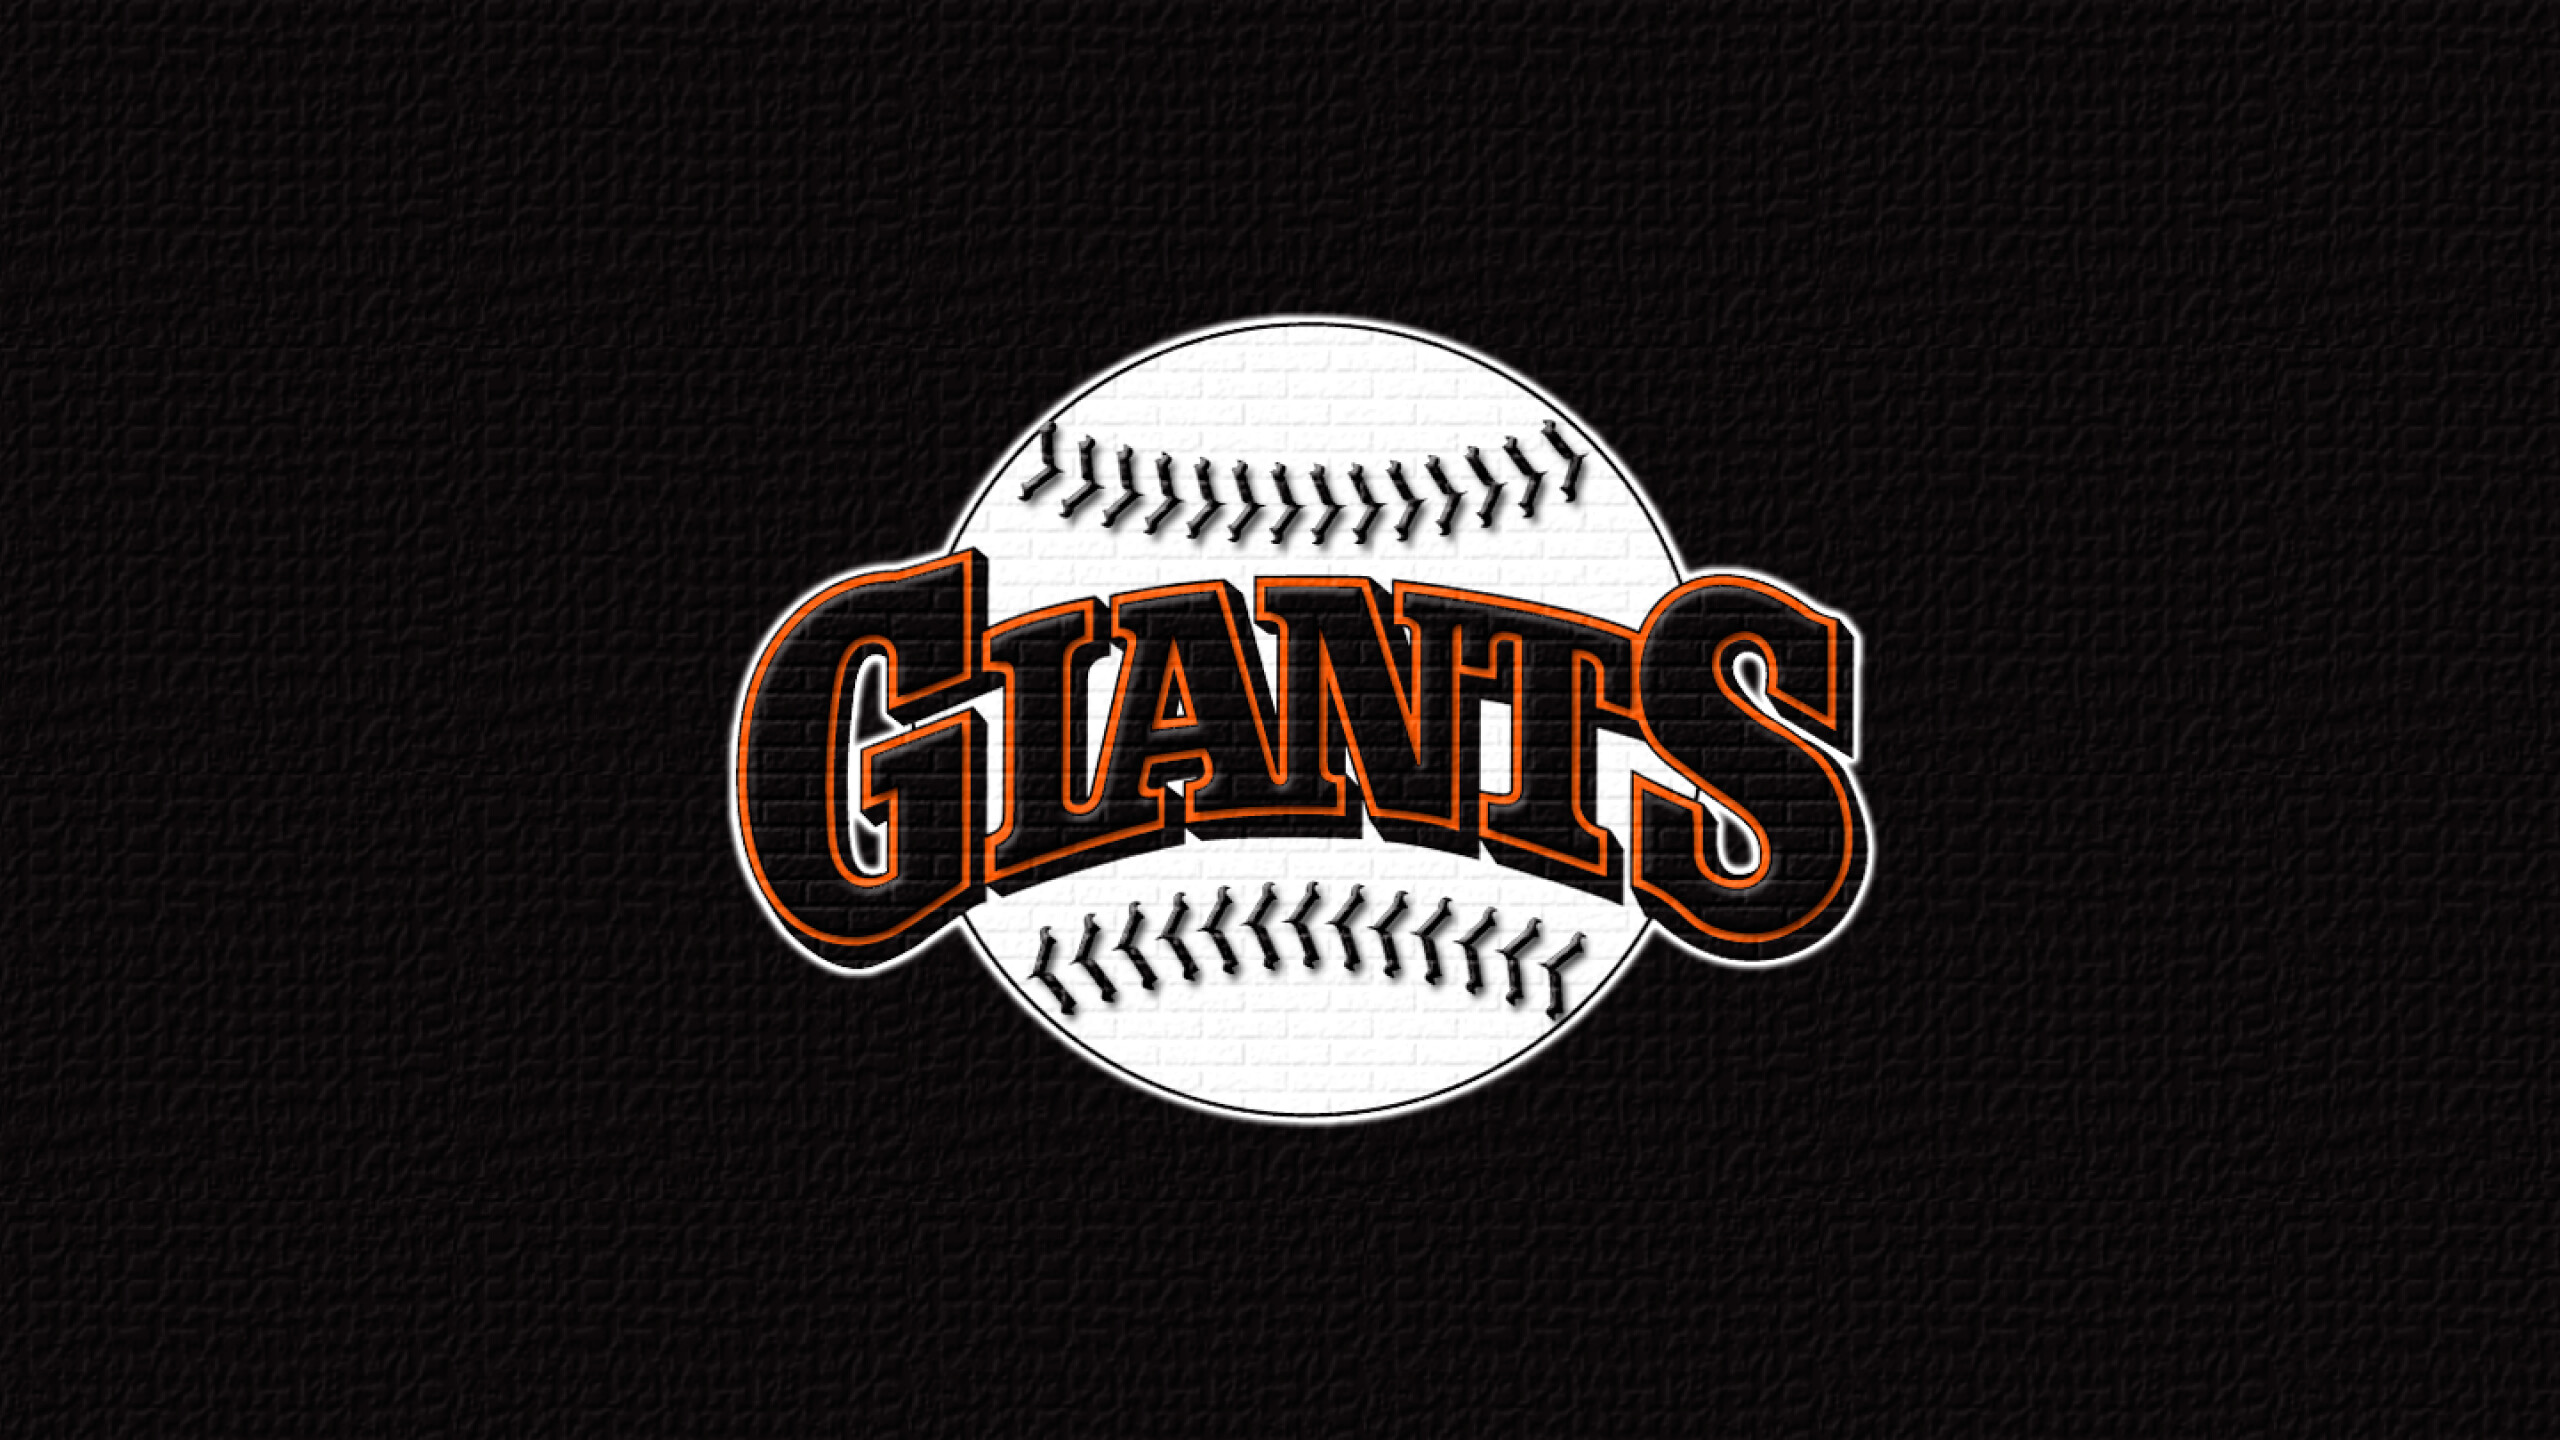 San Francisco Giants: Five-time World Series championships winners, The Baseball Hall of Fame members. 2560x1440 HD Wallpaper.